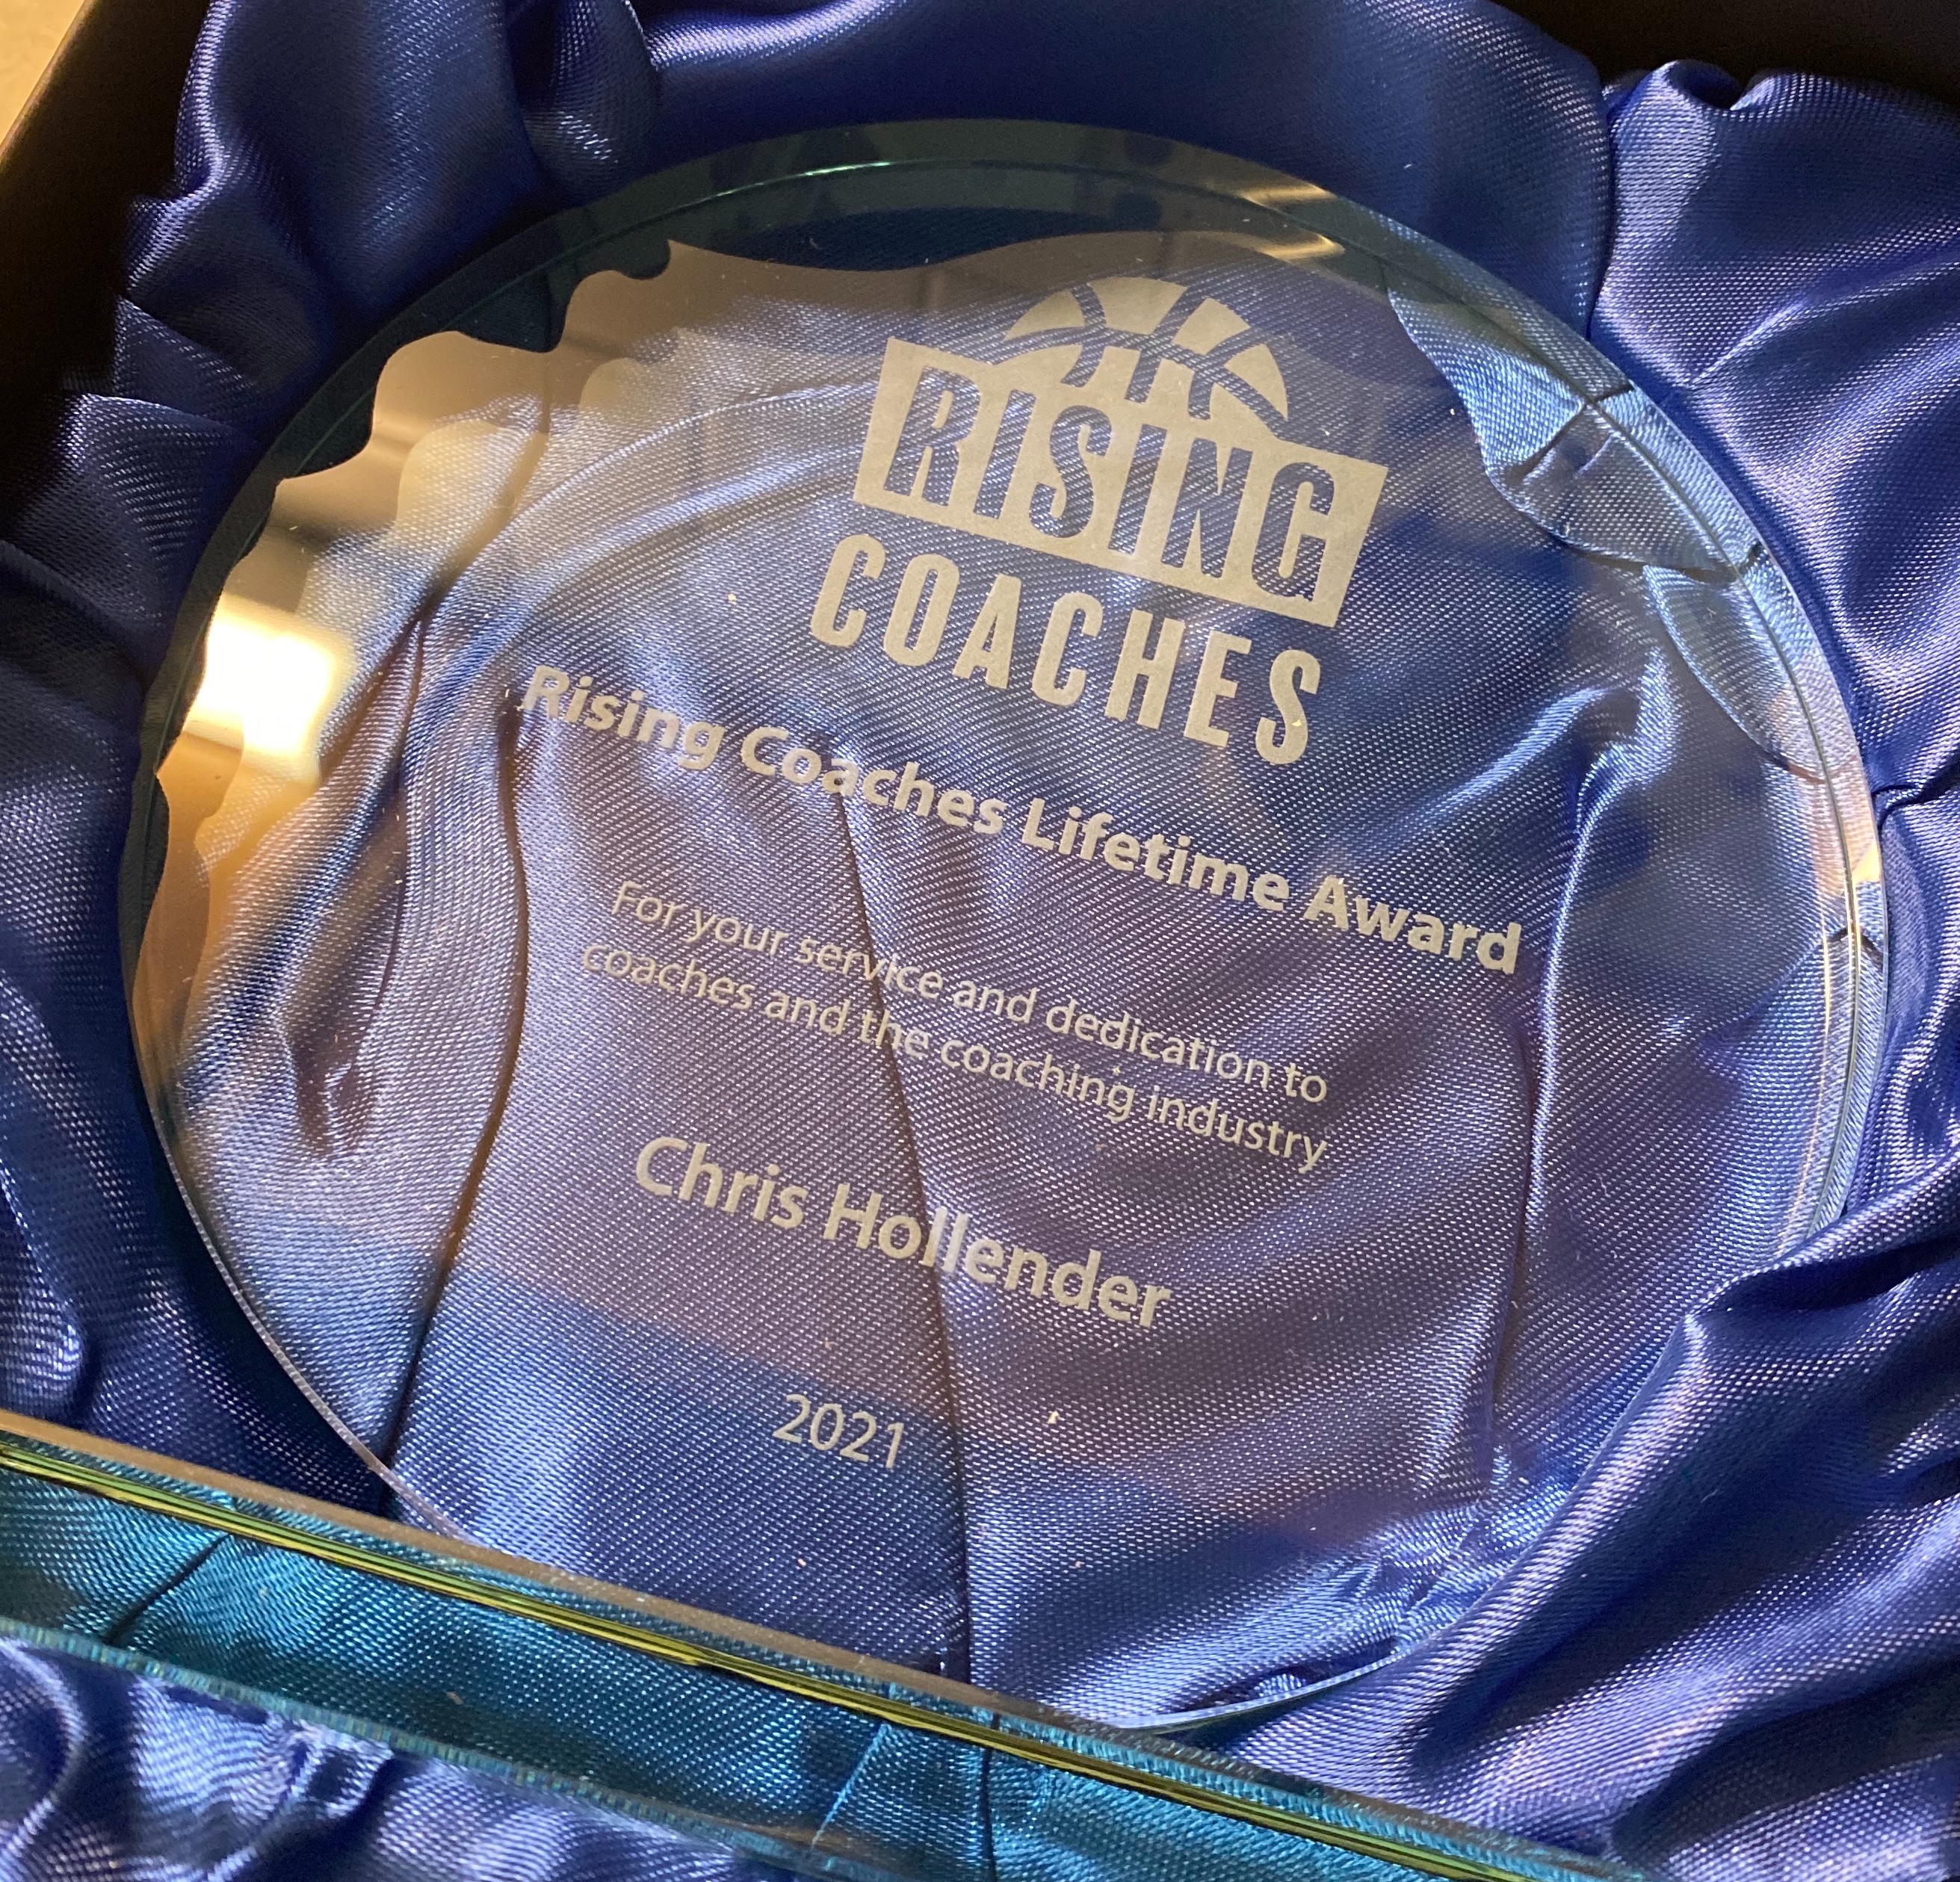 Rising Coaches Announces 2021 Award Winners